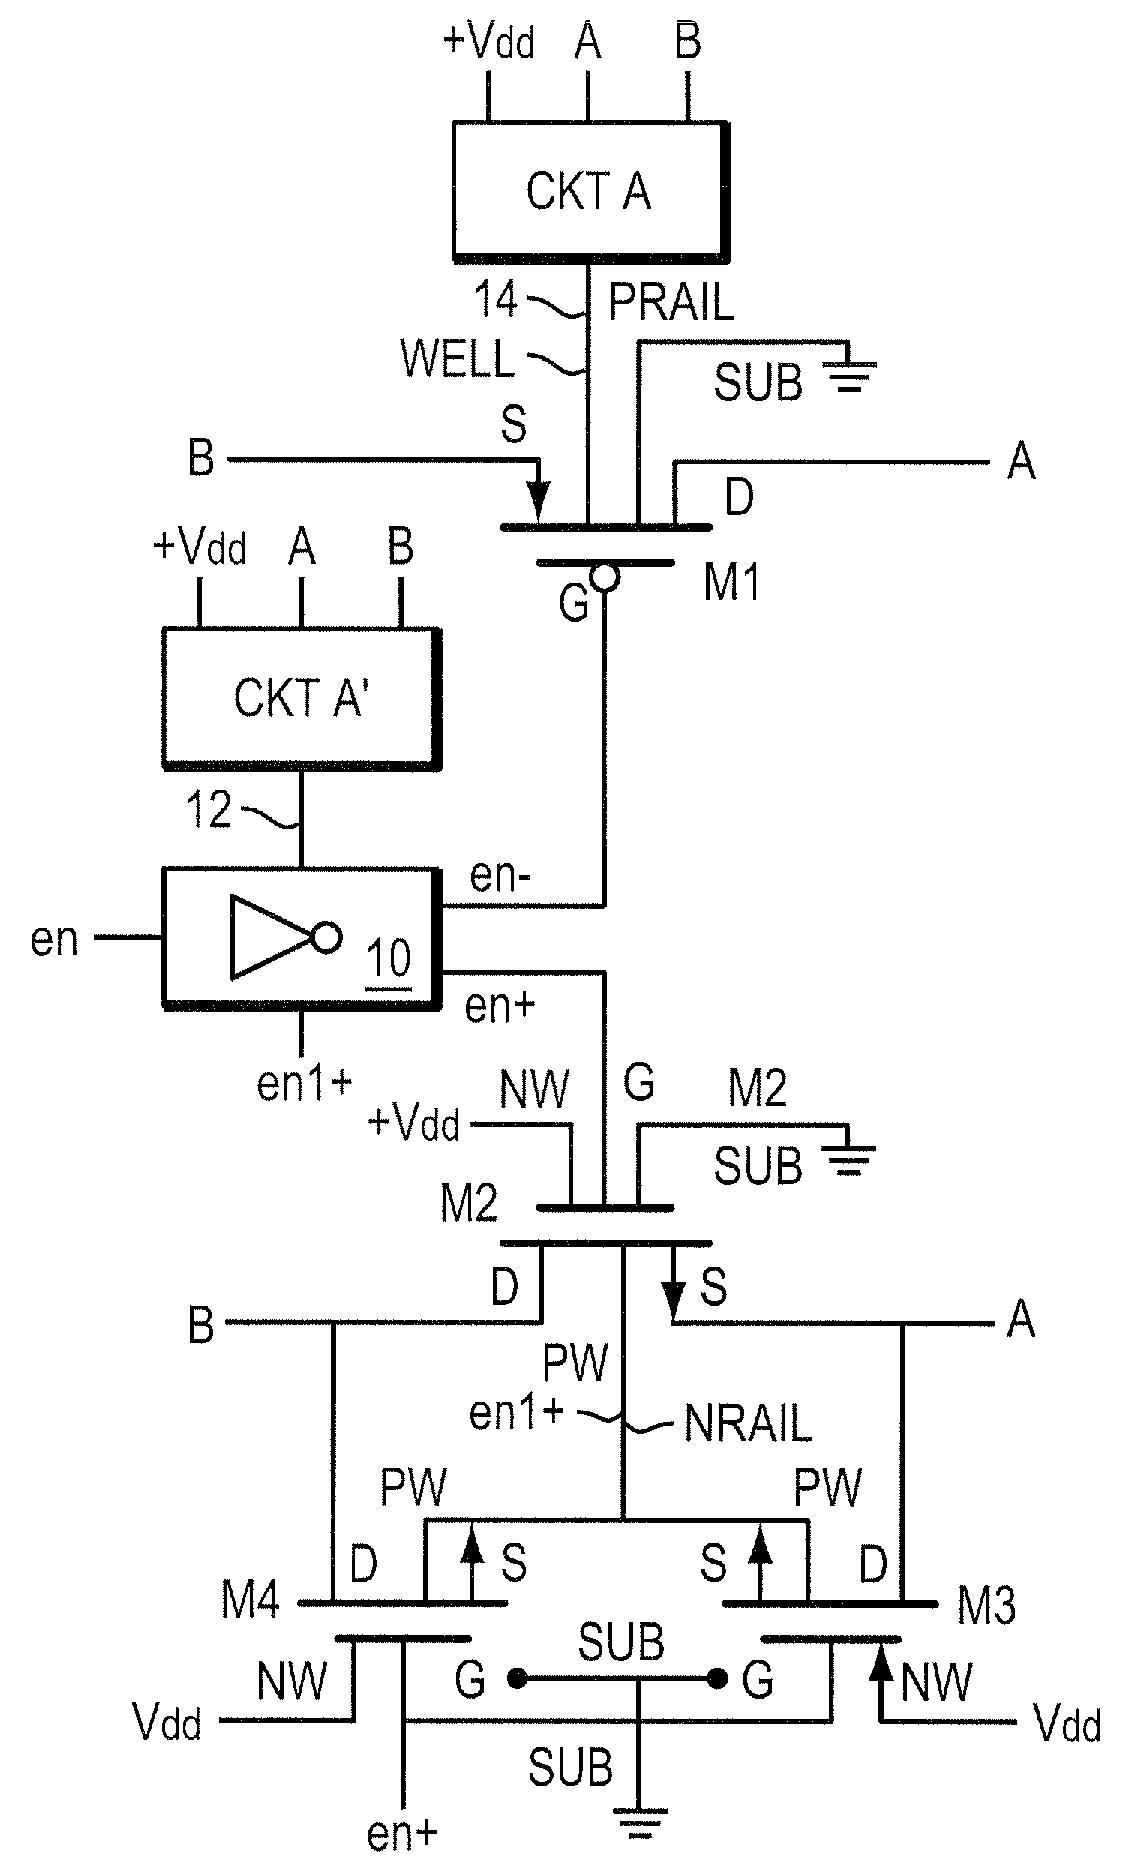 Over-voltage tolerant pass-gate